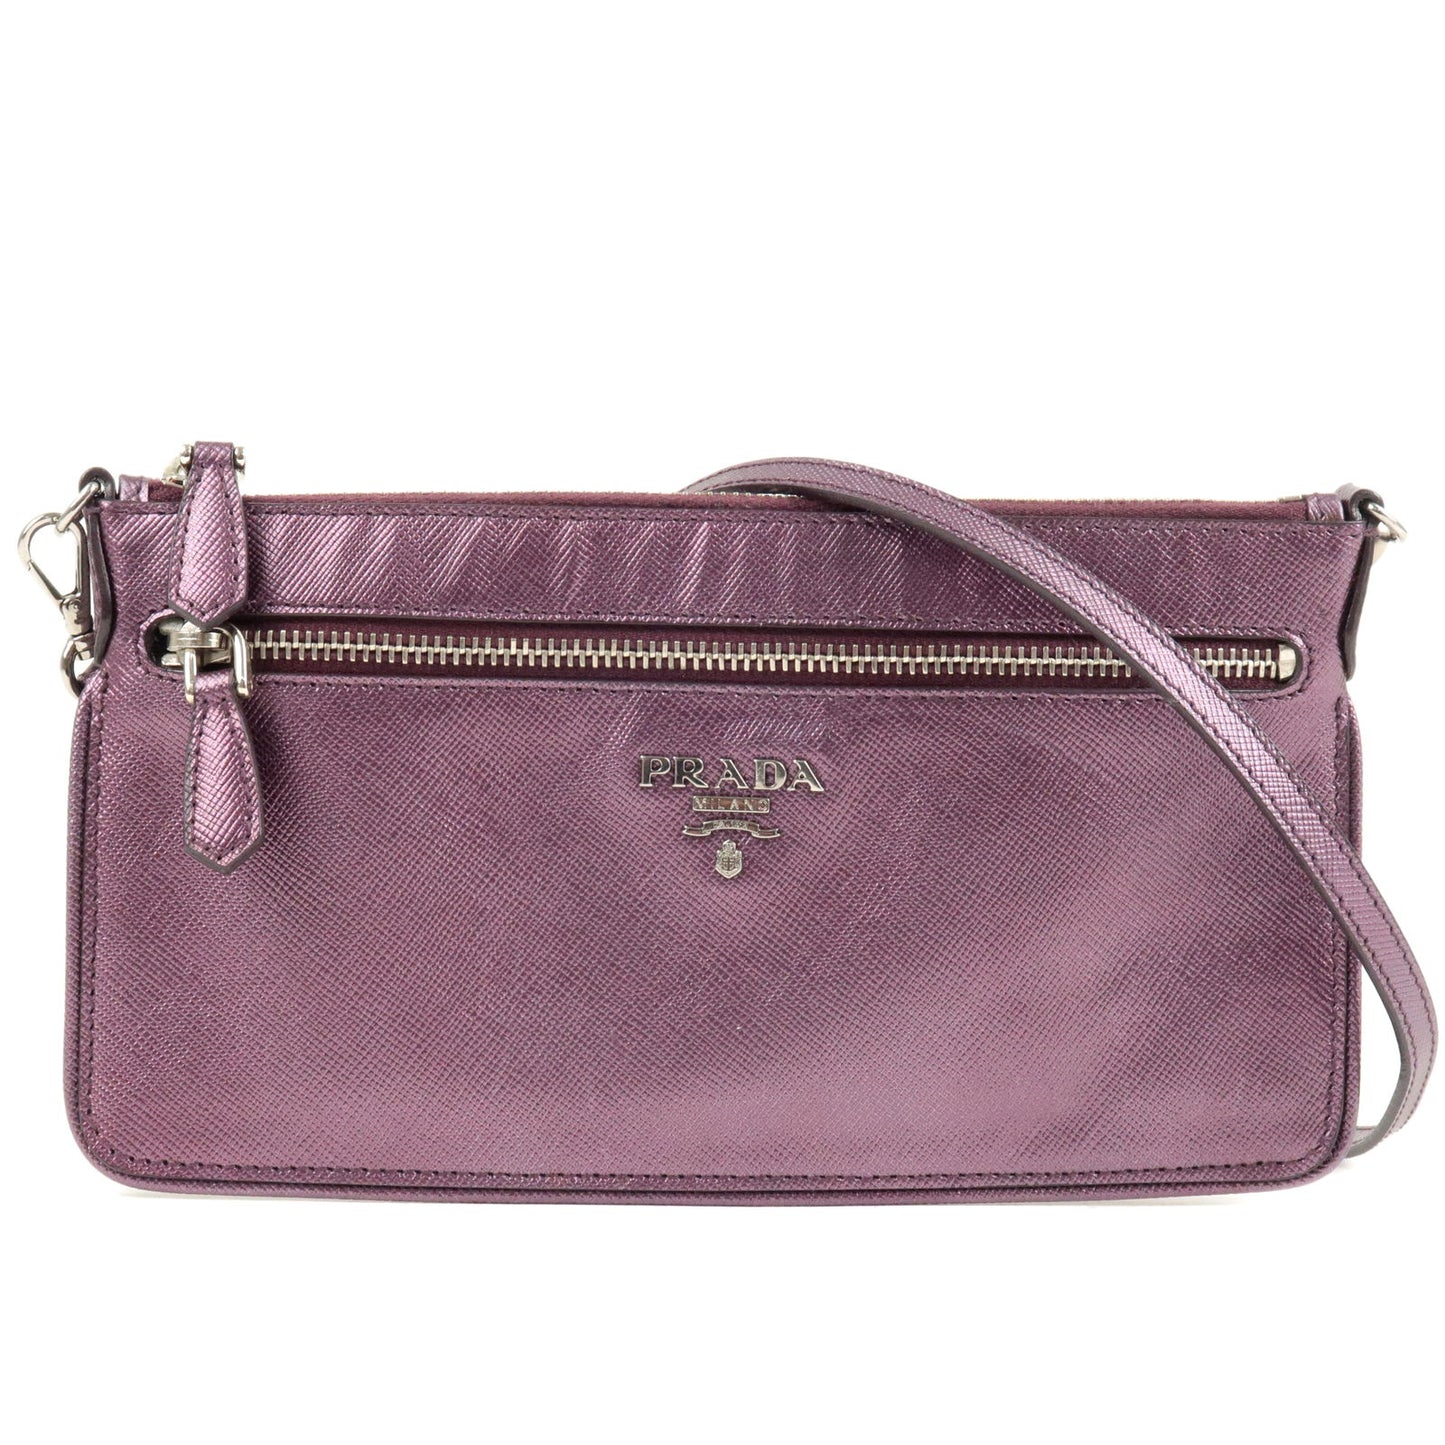 Prada-Leather-2-Way-Shoulder-Bag-Pouch-Purple